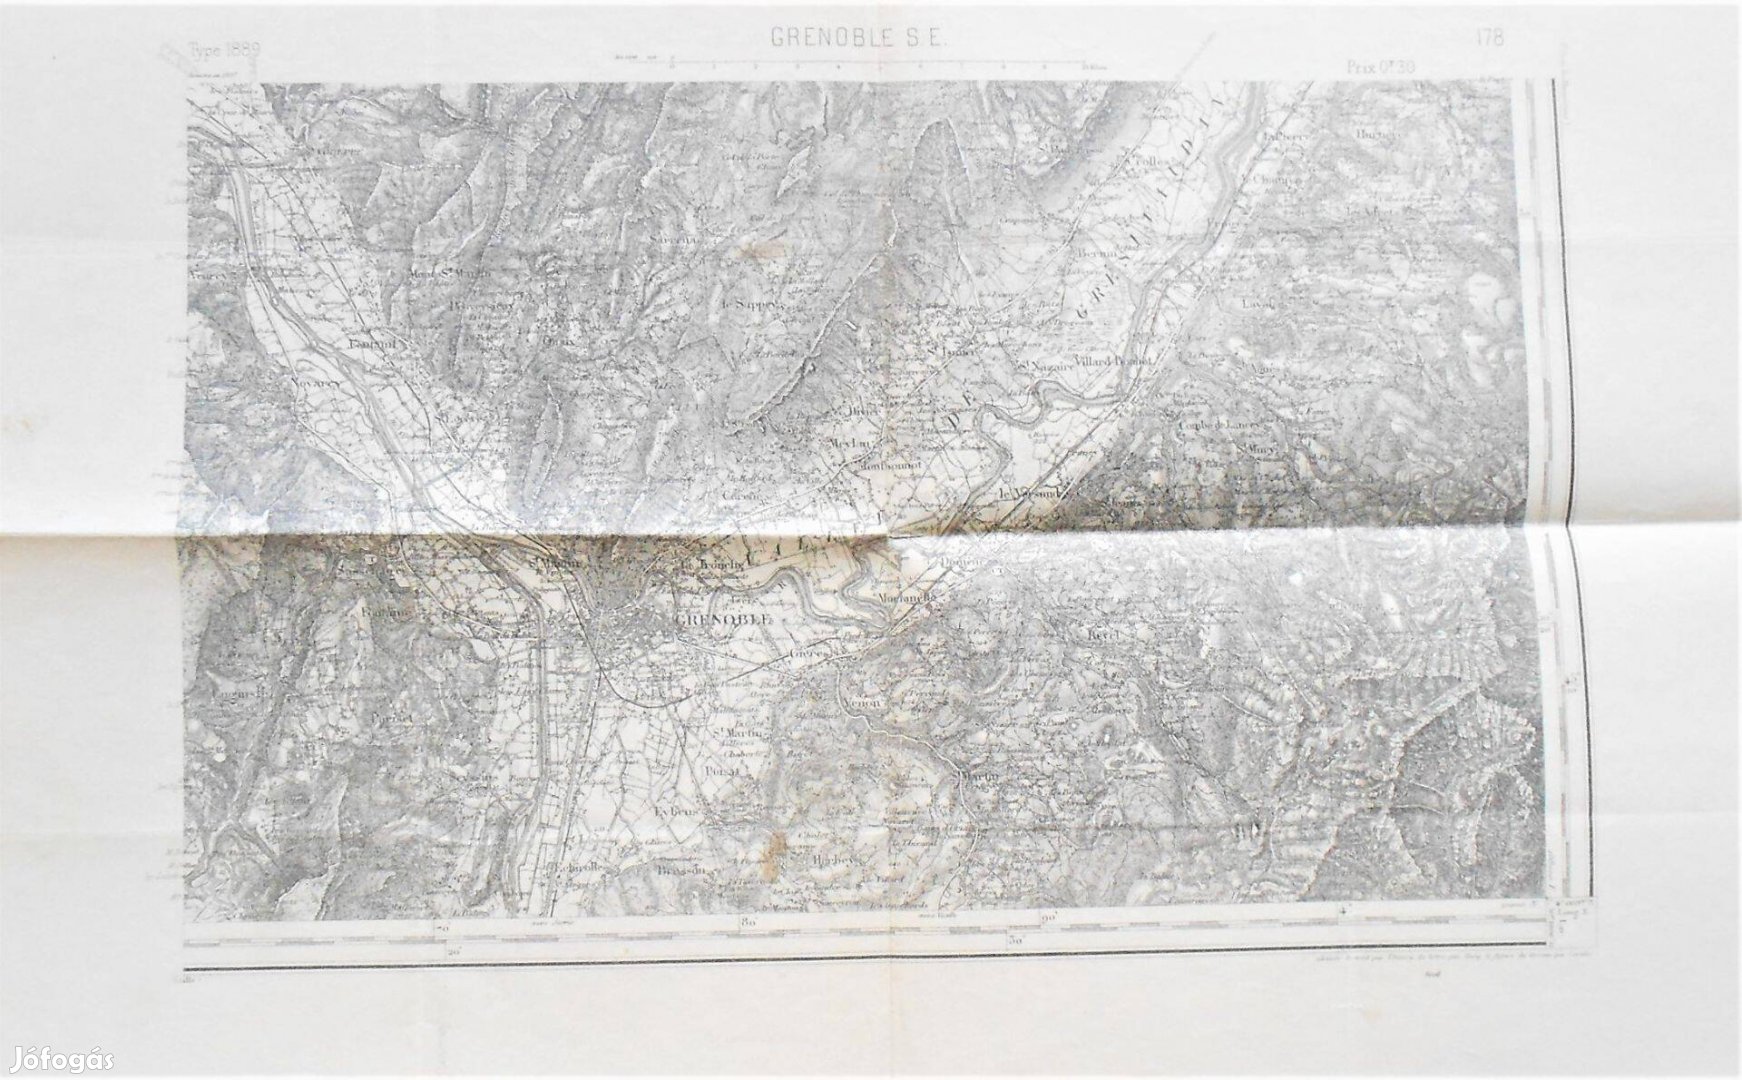 Grenoble S.E. régi térkép Type 1889